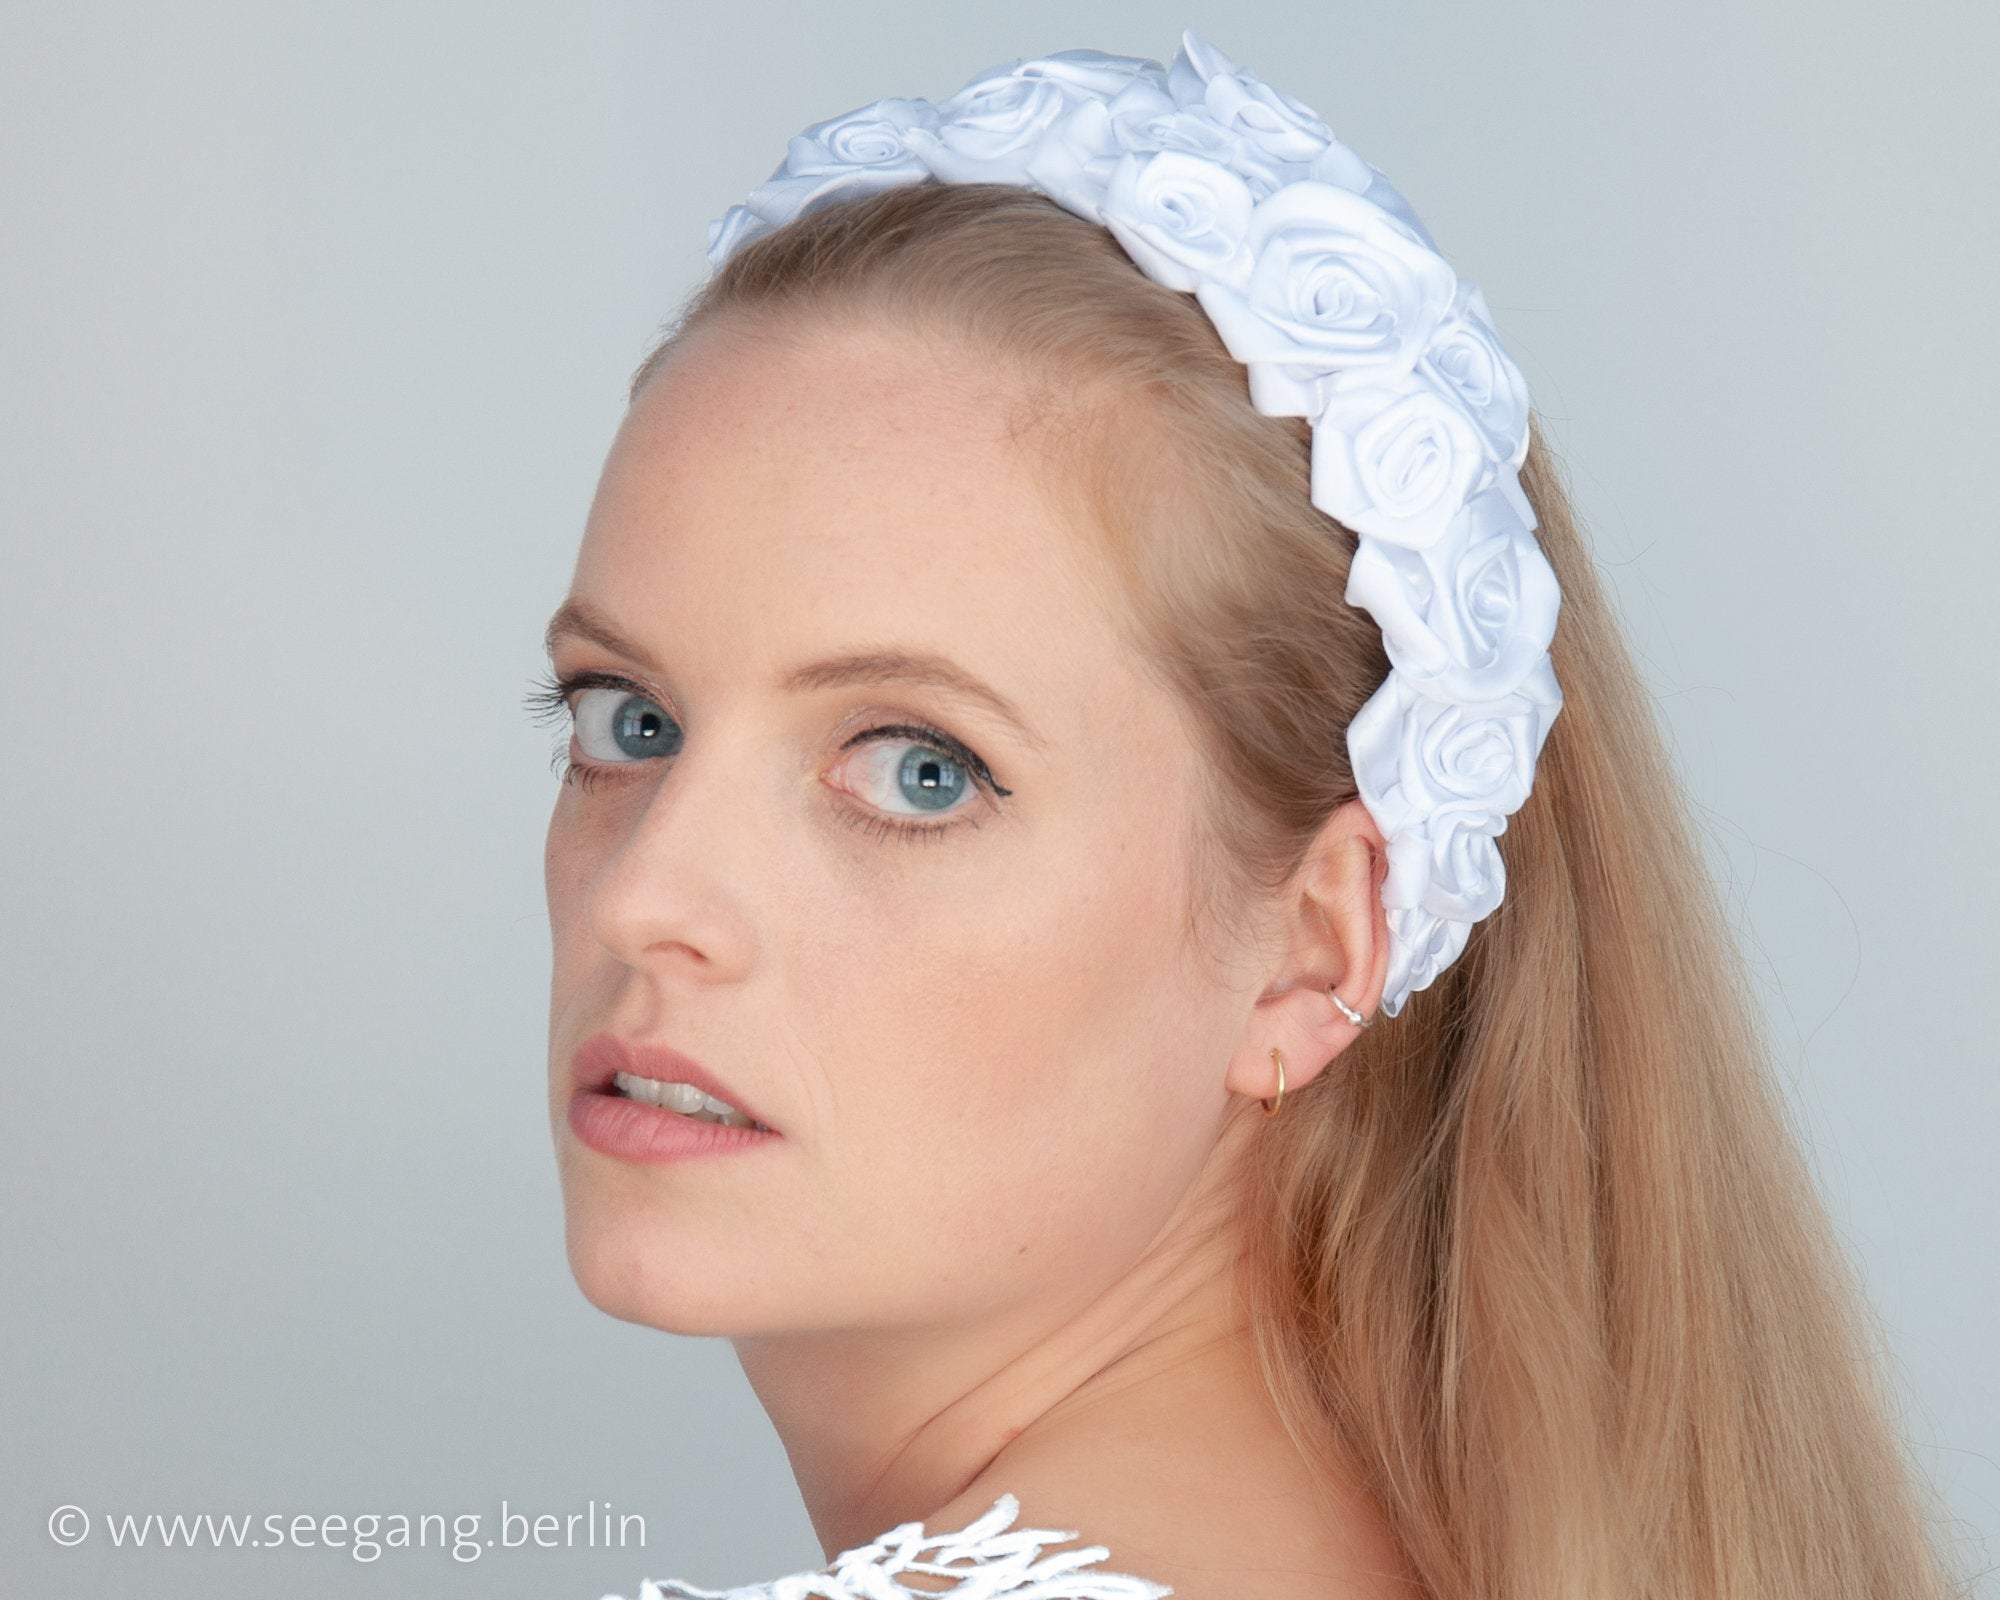 HAIR CIRCLET - BRIDAL HEADBAND FROM MANY HAND SEWN ROSES IN WHITE COLOR © Seegang Berlin